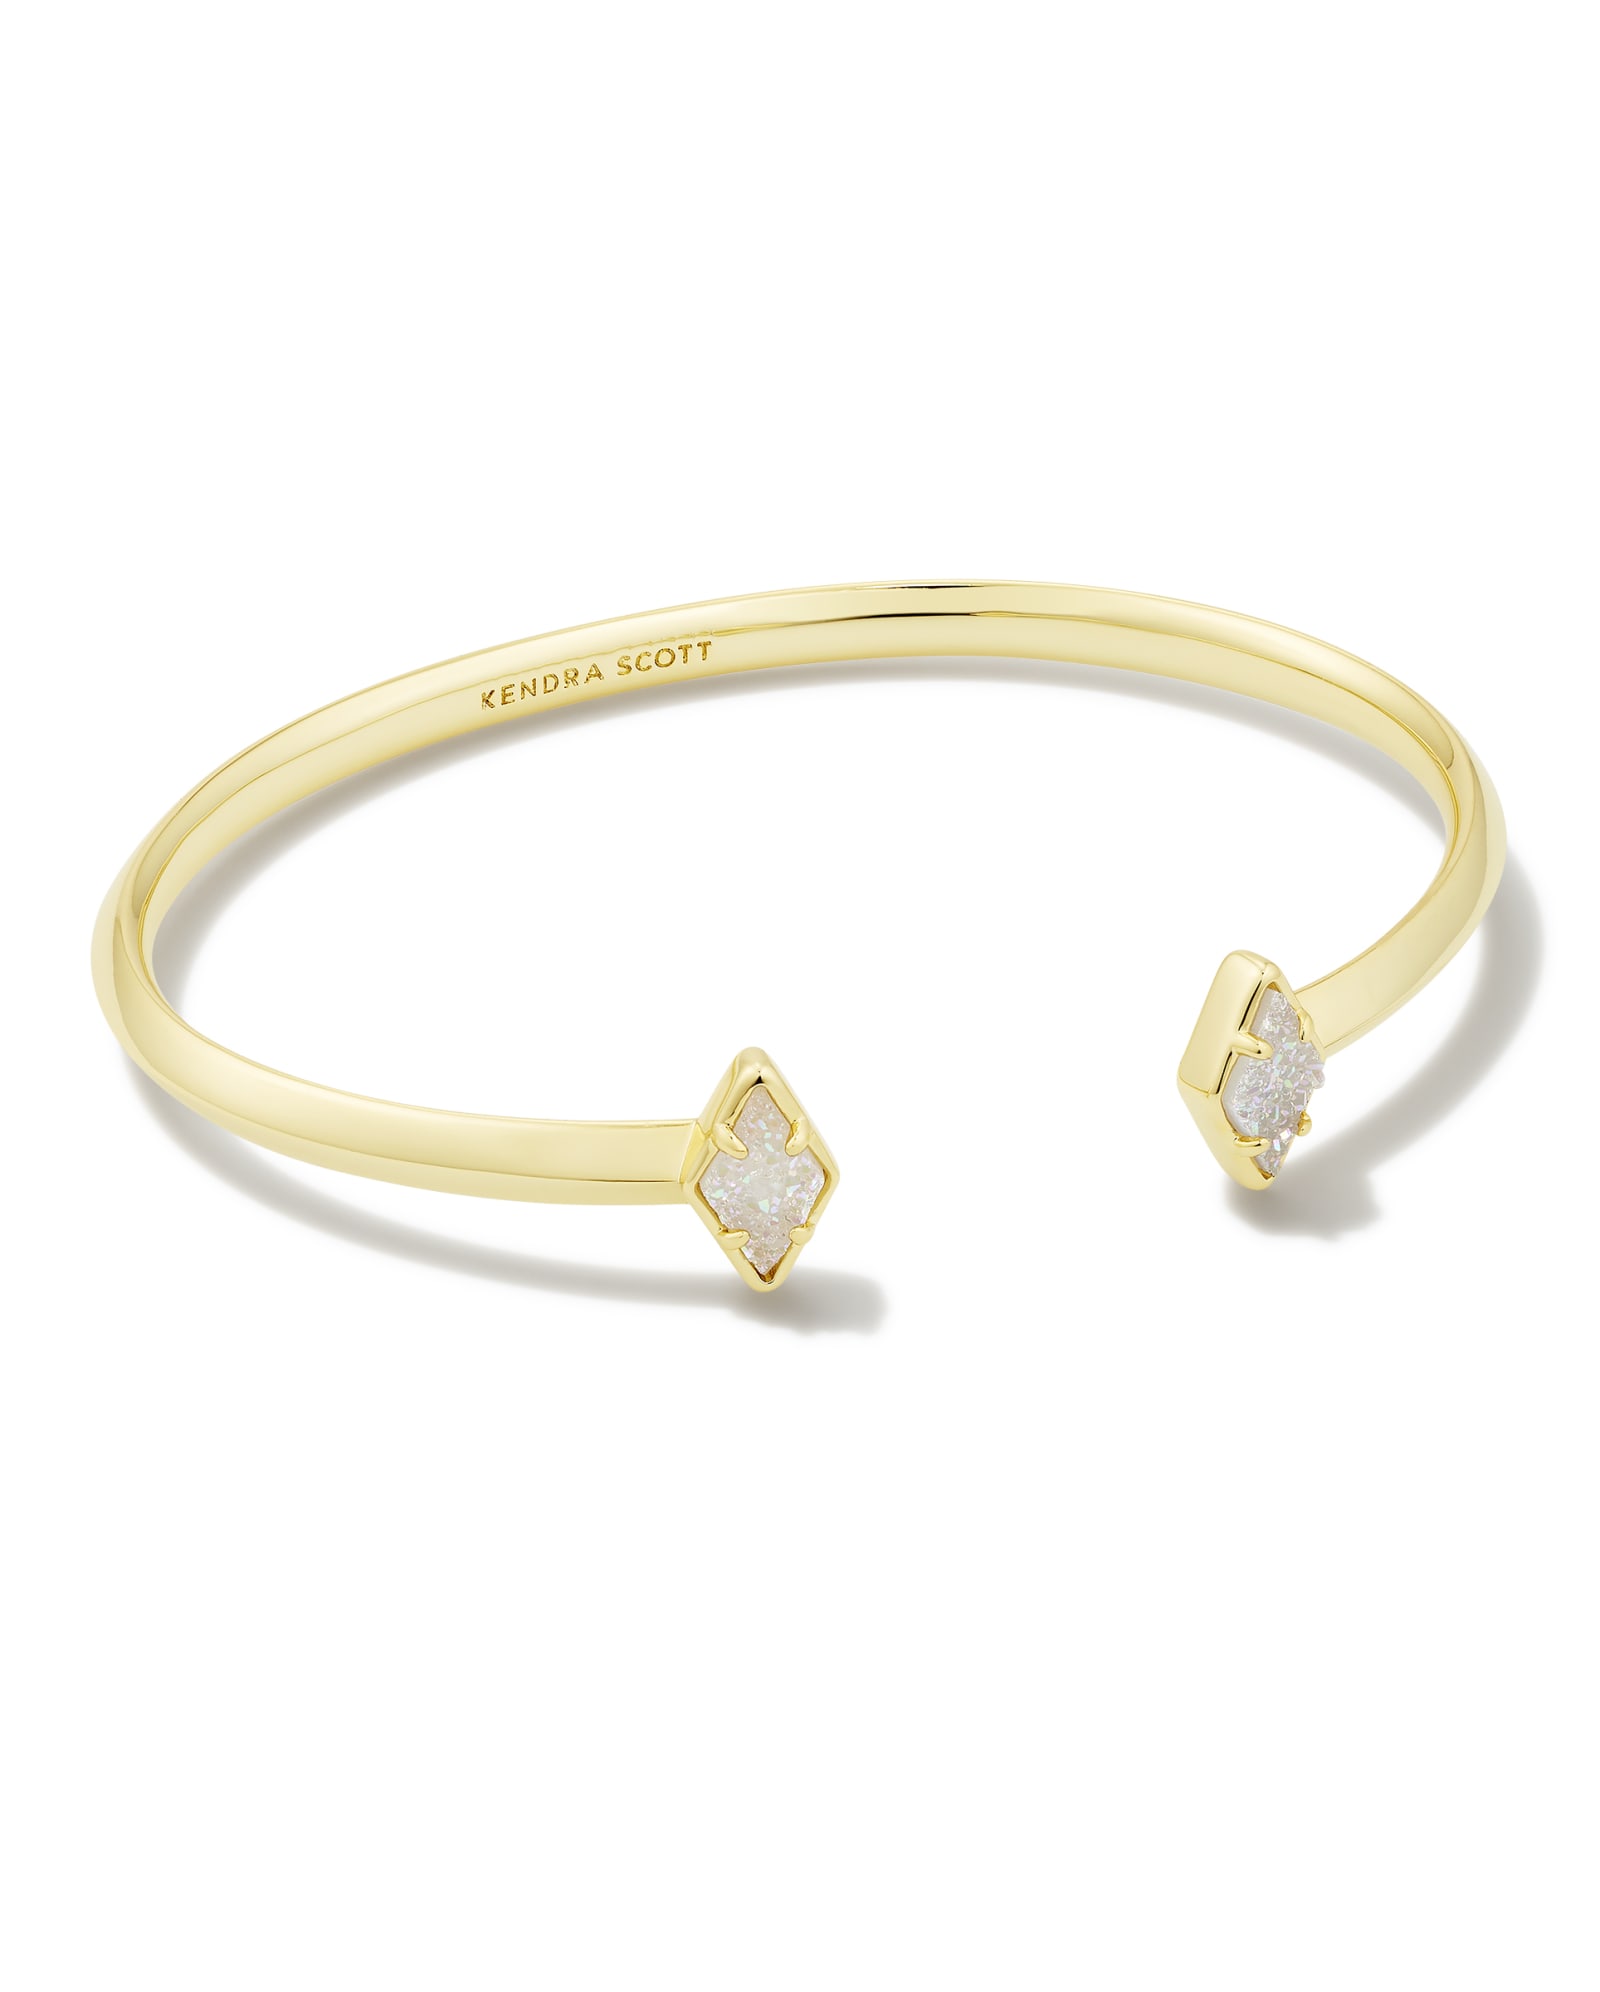 Officially licensed, rose gold tone cuff bracelet with the University of  Nebraska logo., 940615